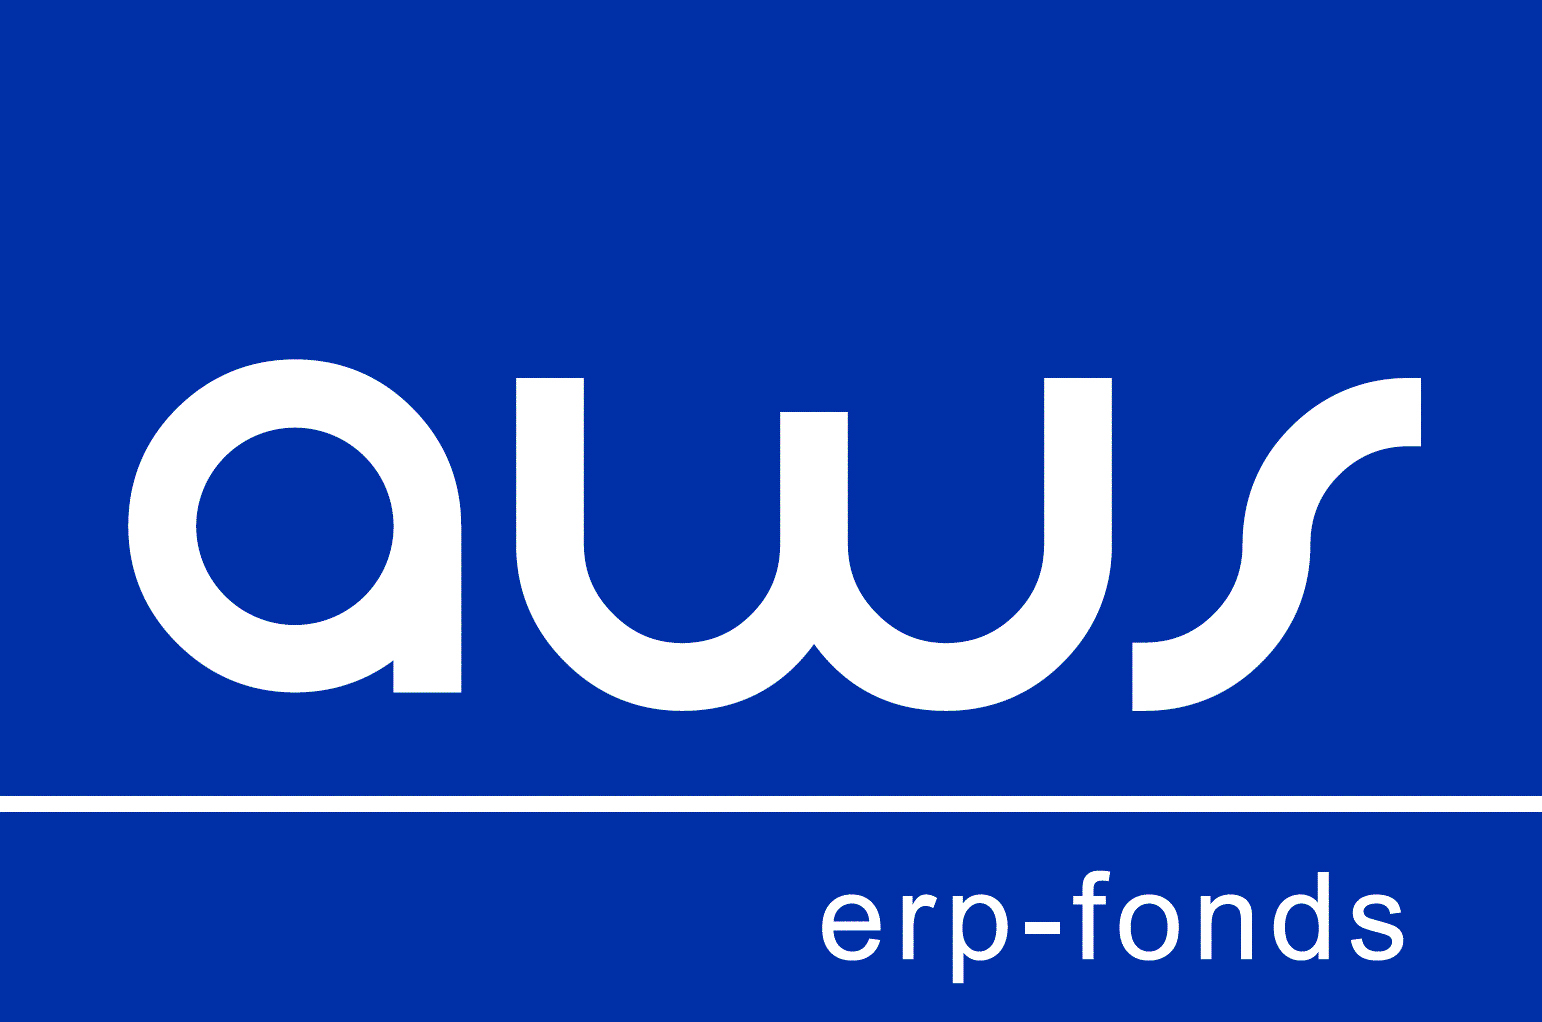 aws_Logo